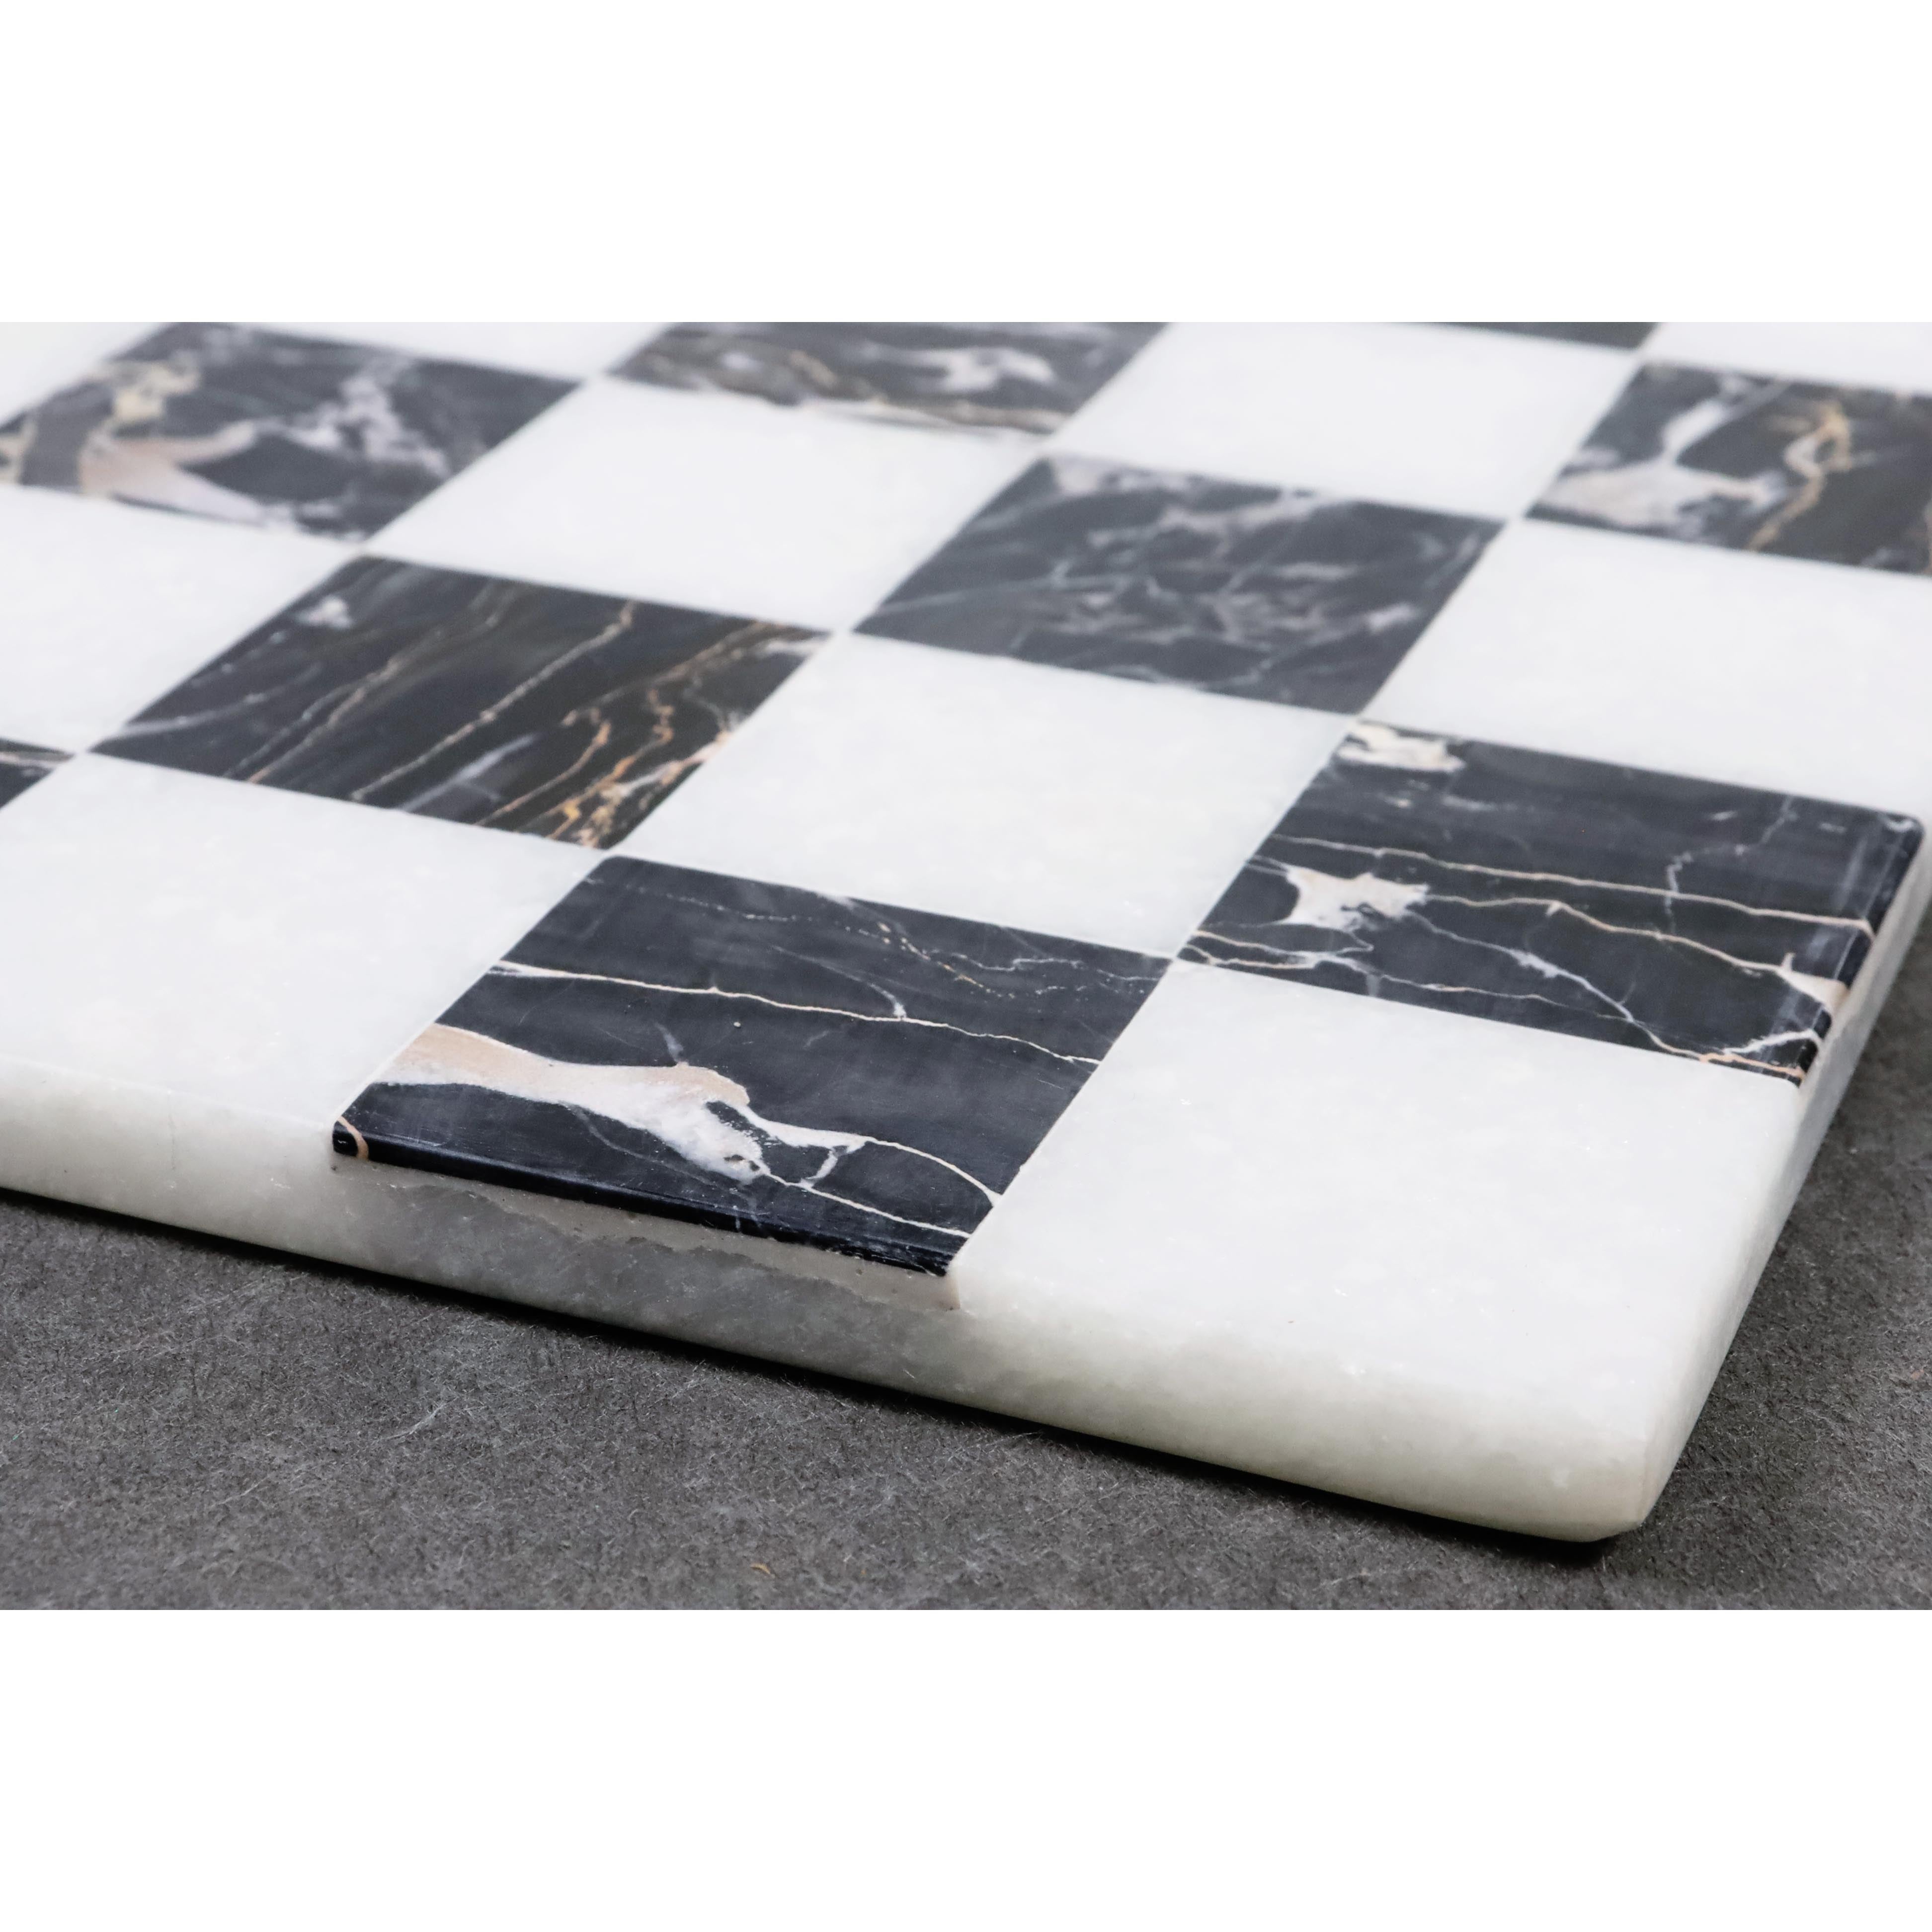 15'' Borderless Marble Stone Luxury Chess Board - Lapis lazuli